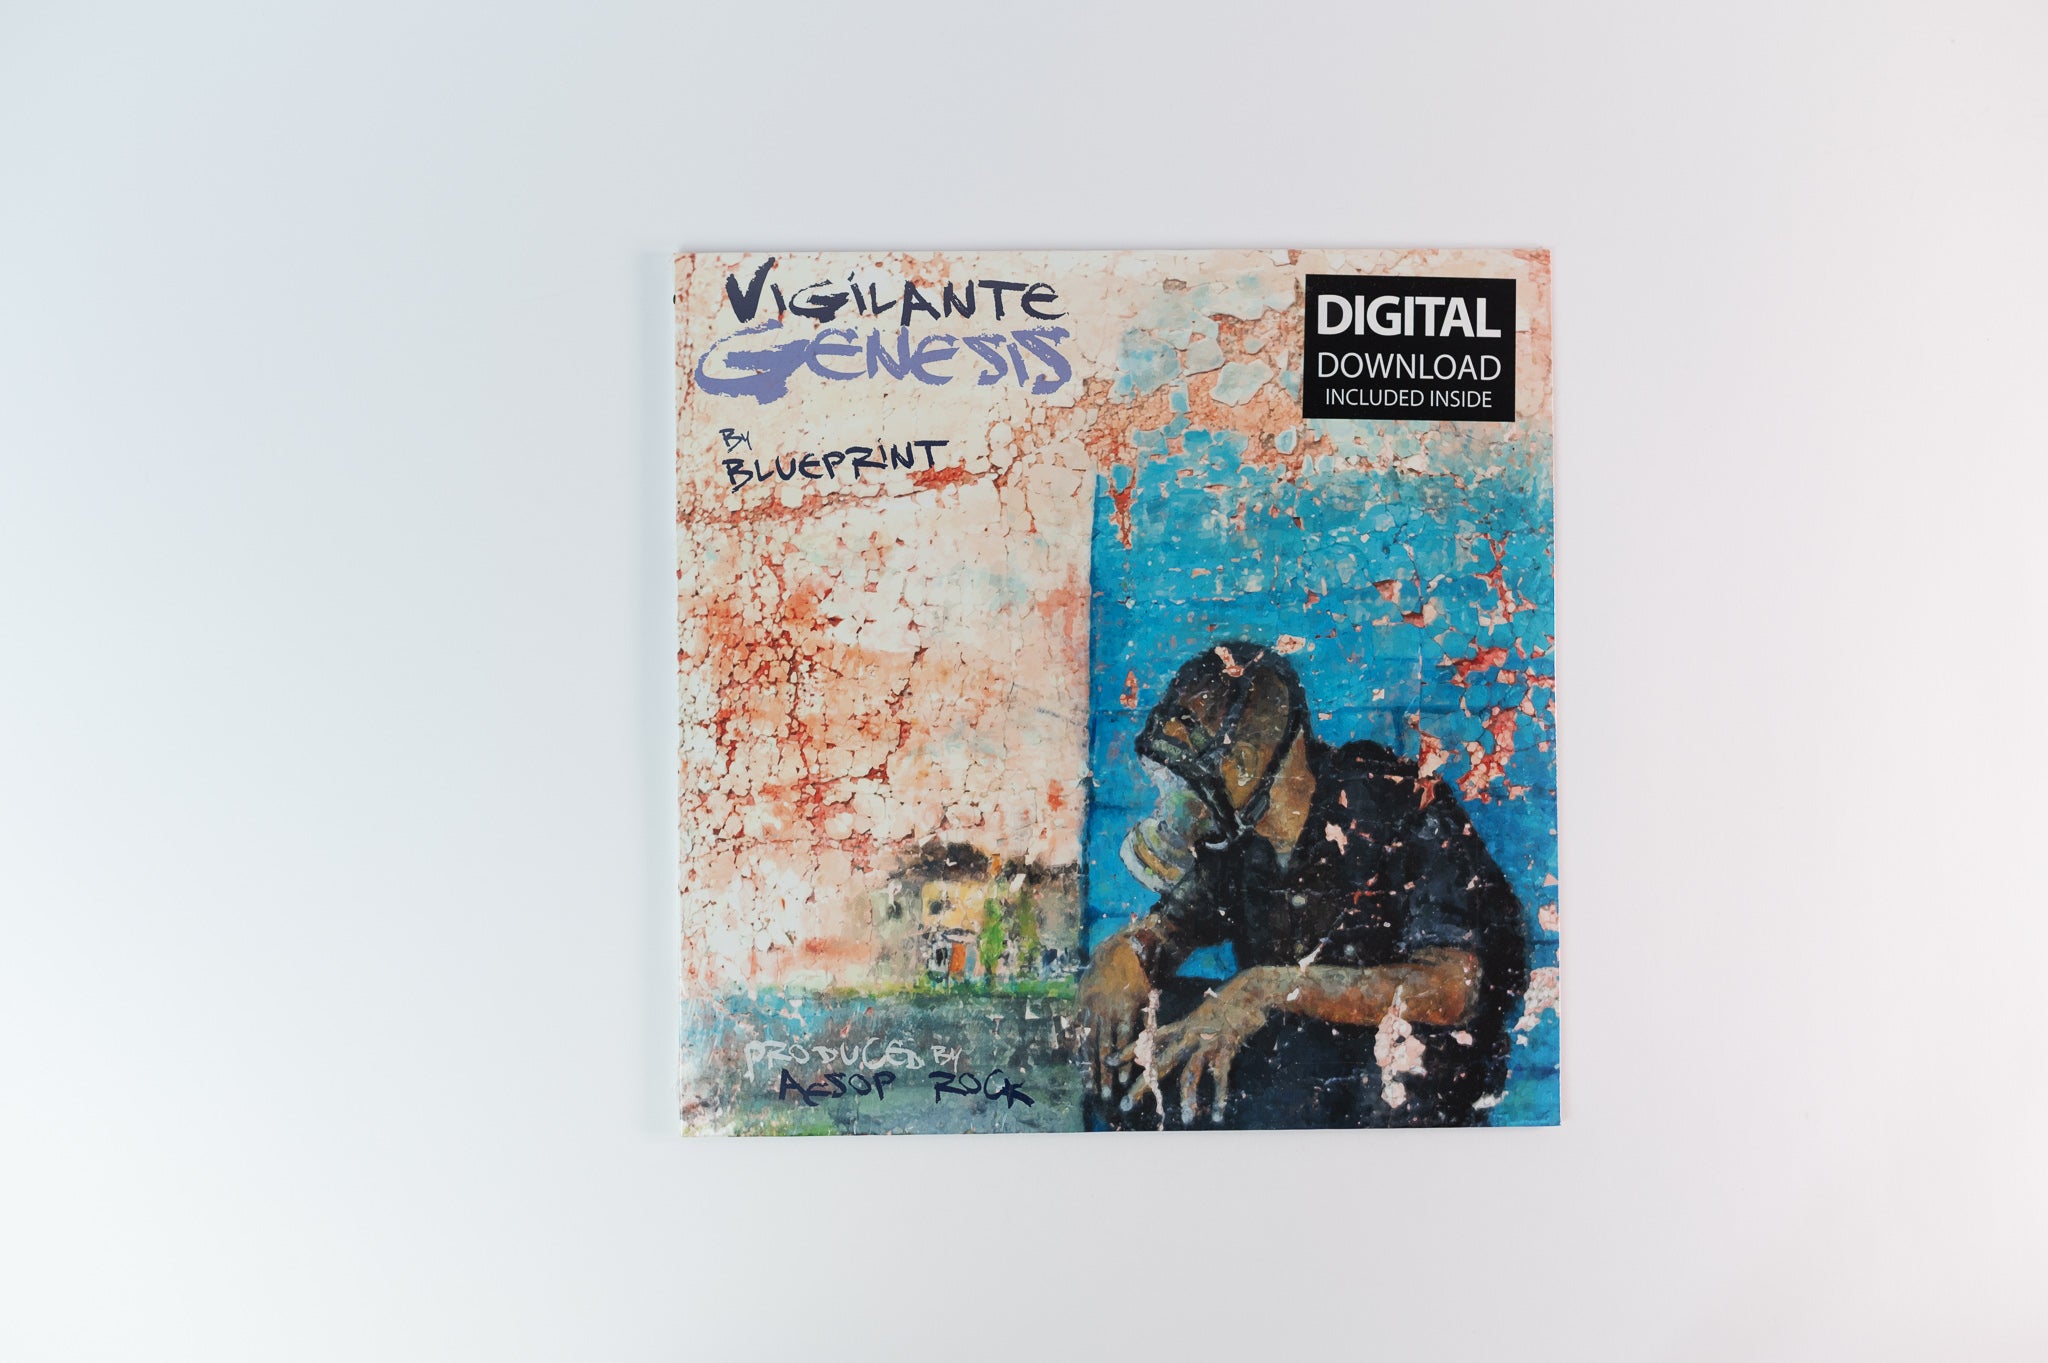 Blueprint - Vigilante Genesis on Weightless Blue Vinyl Sealed